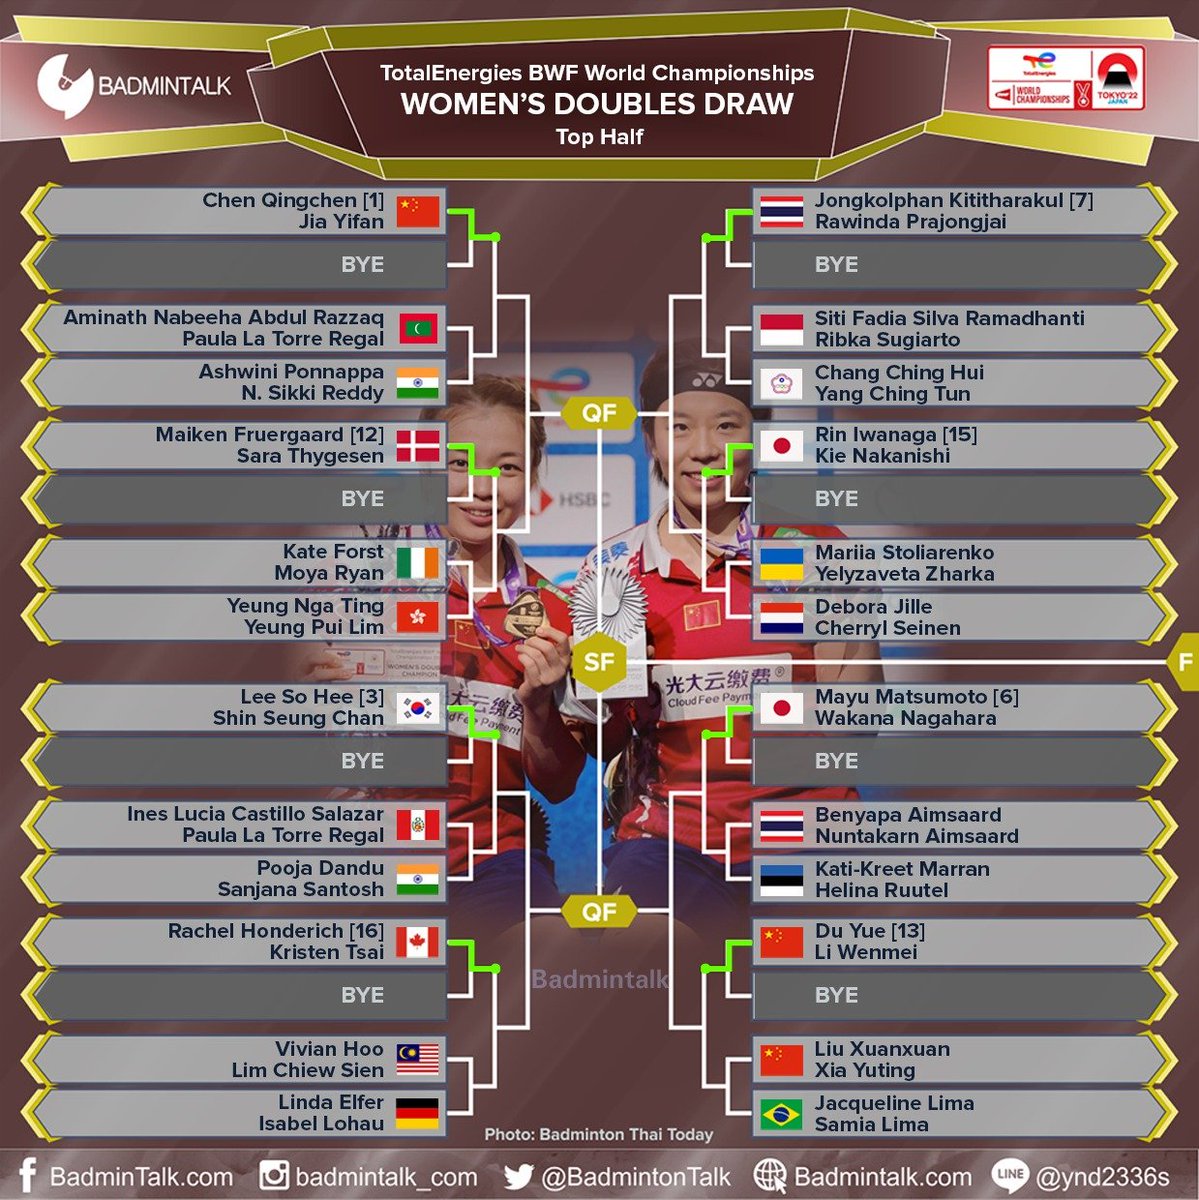 Badminton Talk on Twitter: "BREAKING Draw Scheme of Women's Doubles at BWF  World Championships 2022 #BWC2022 Indonesia akan diwakili oleh Siti/Ribka  dan Febriana/Amalia. https://t.co/jYBSuJJlyp" / Twitter